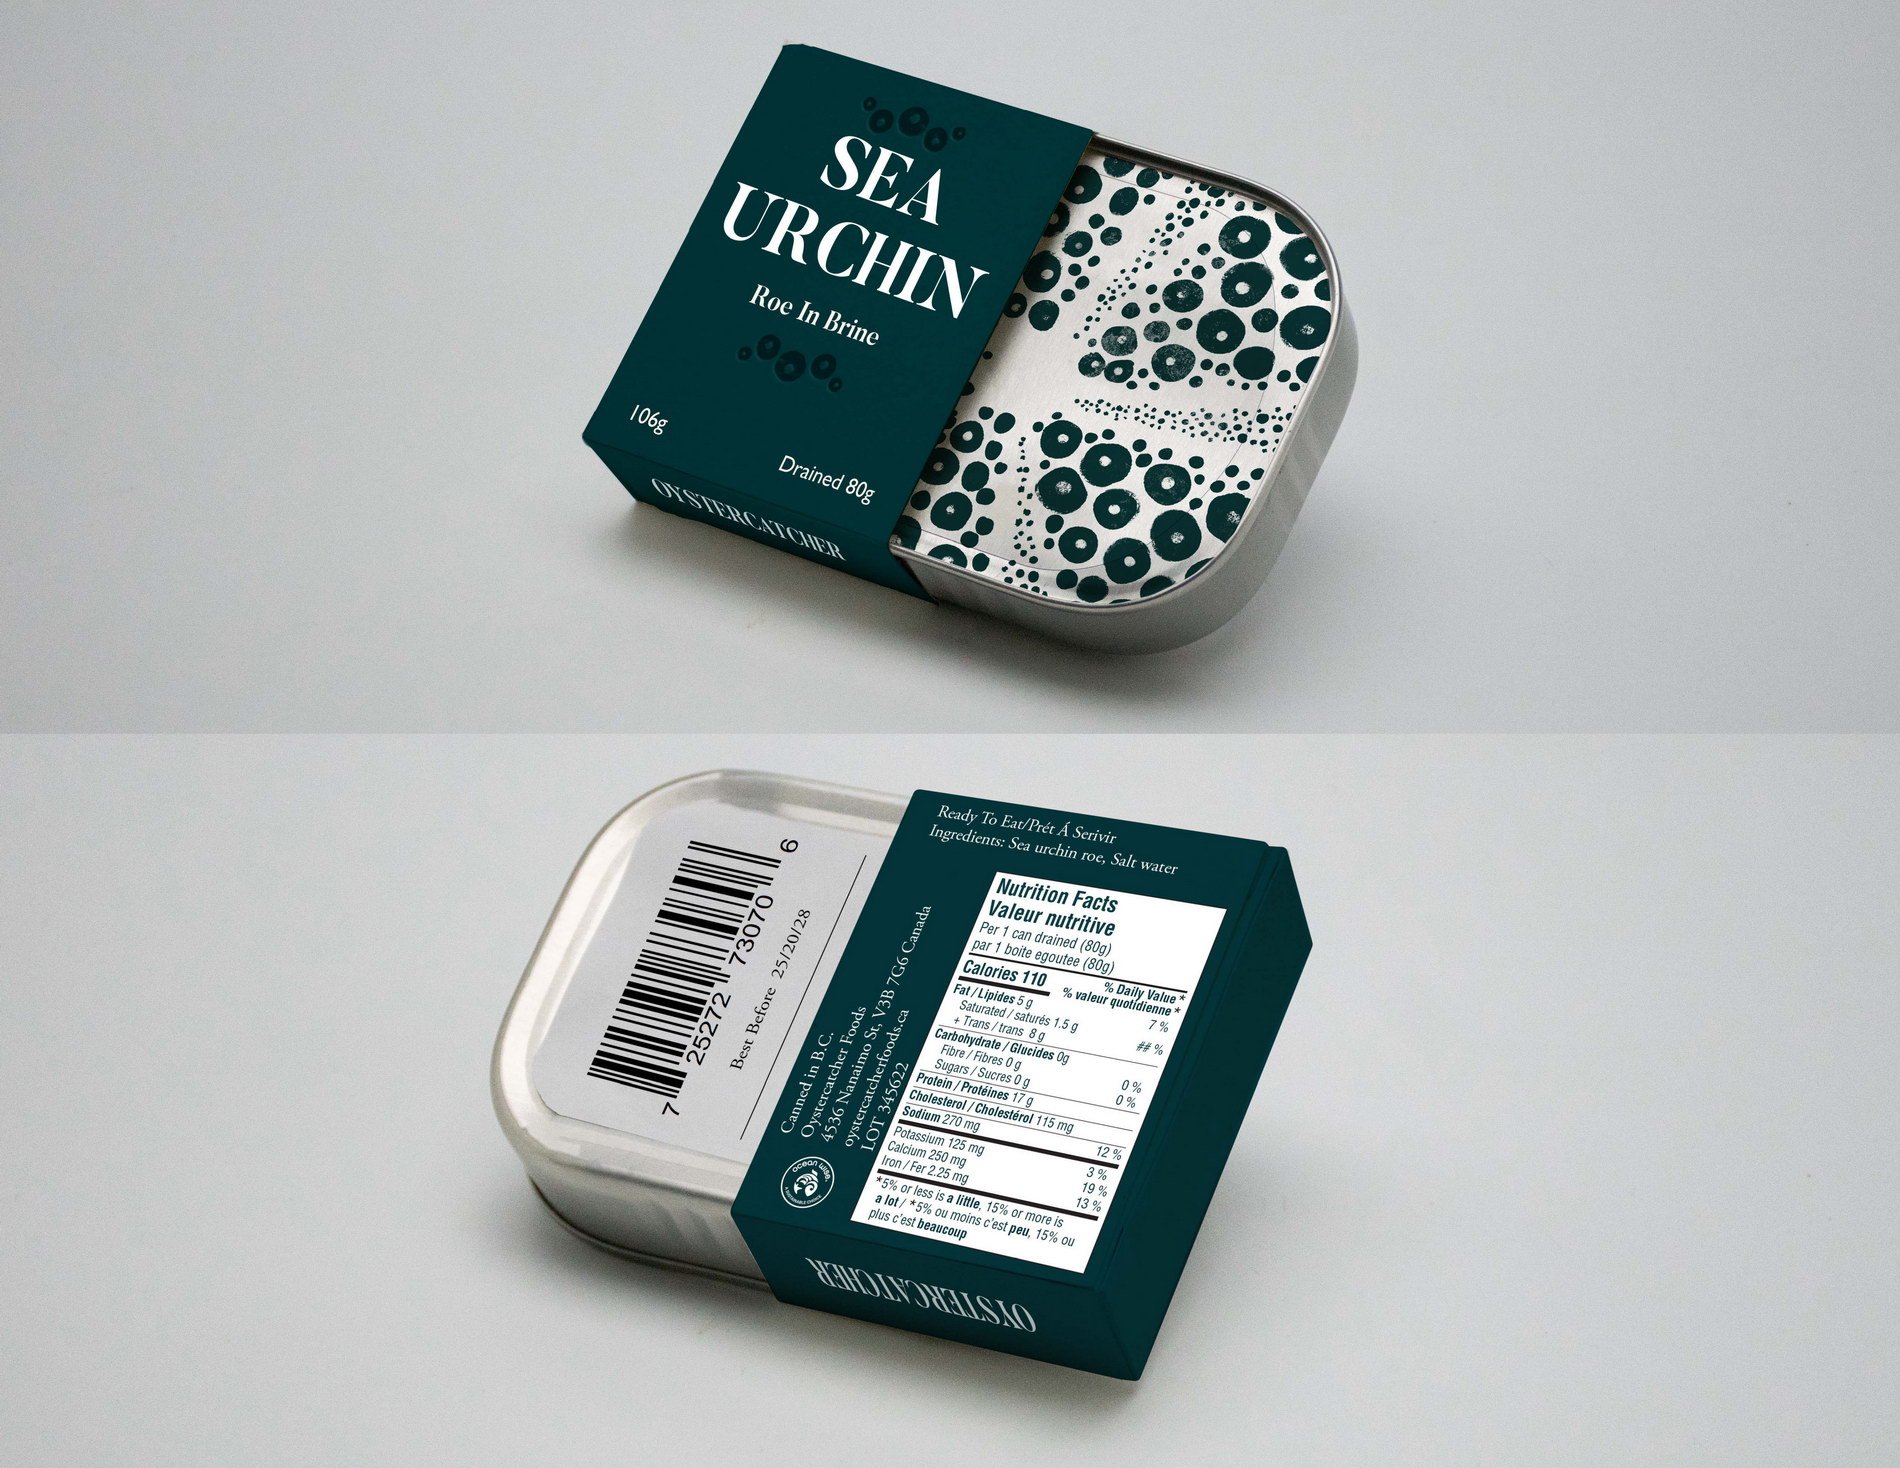 ethan-woronko--sardine-packaging--oyster-catcher--visual-communication-studio-branding-concentration-capilano-university-idea-school-of-design--03.jpg